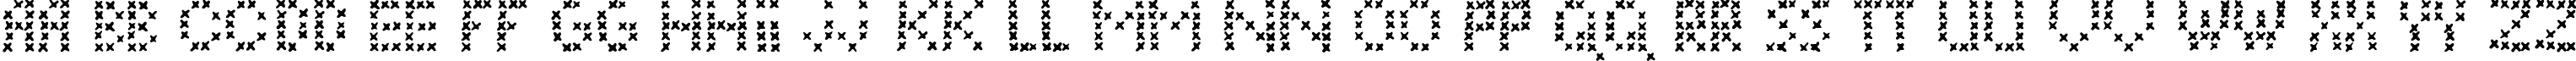 Пример написания английского алфавита шрифтом LC Embroidery